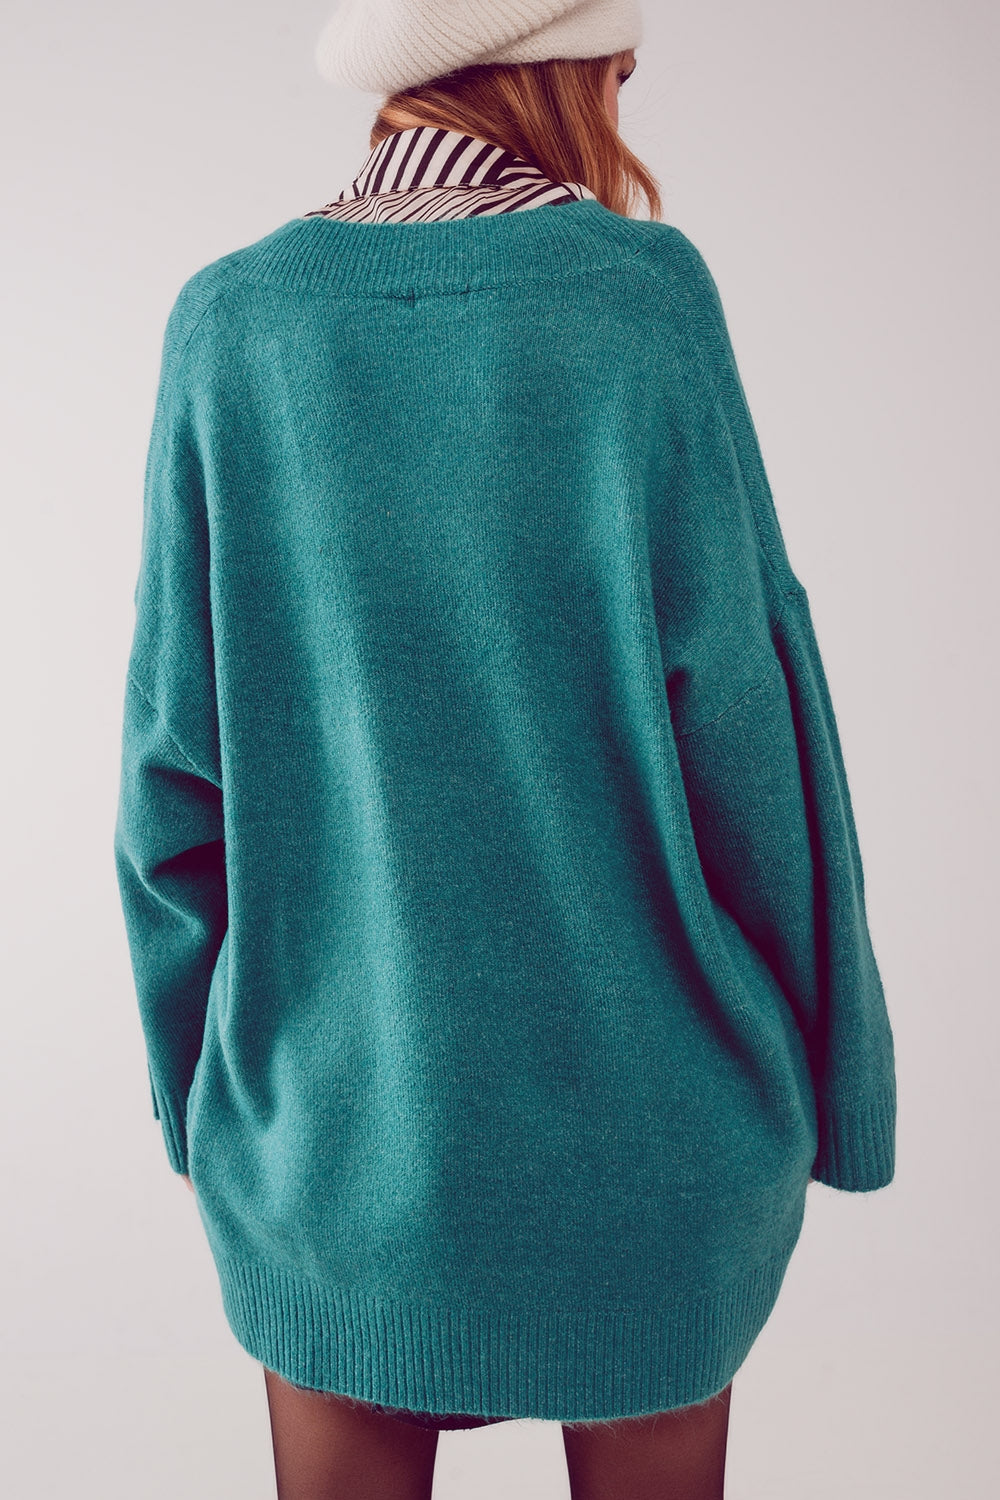 Oversized v neck sweater dress in turquoise Szua Store